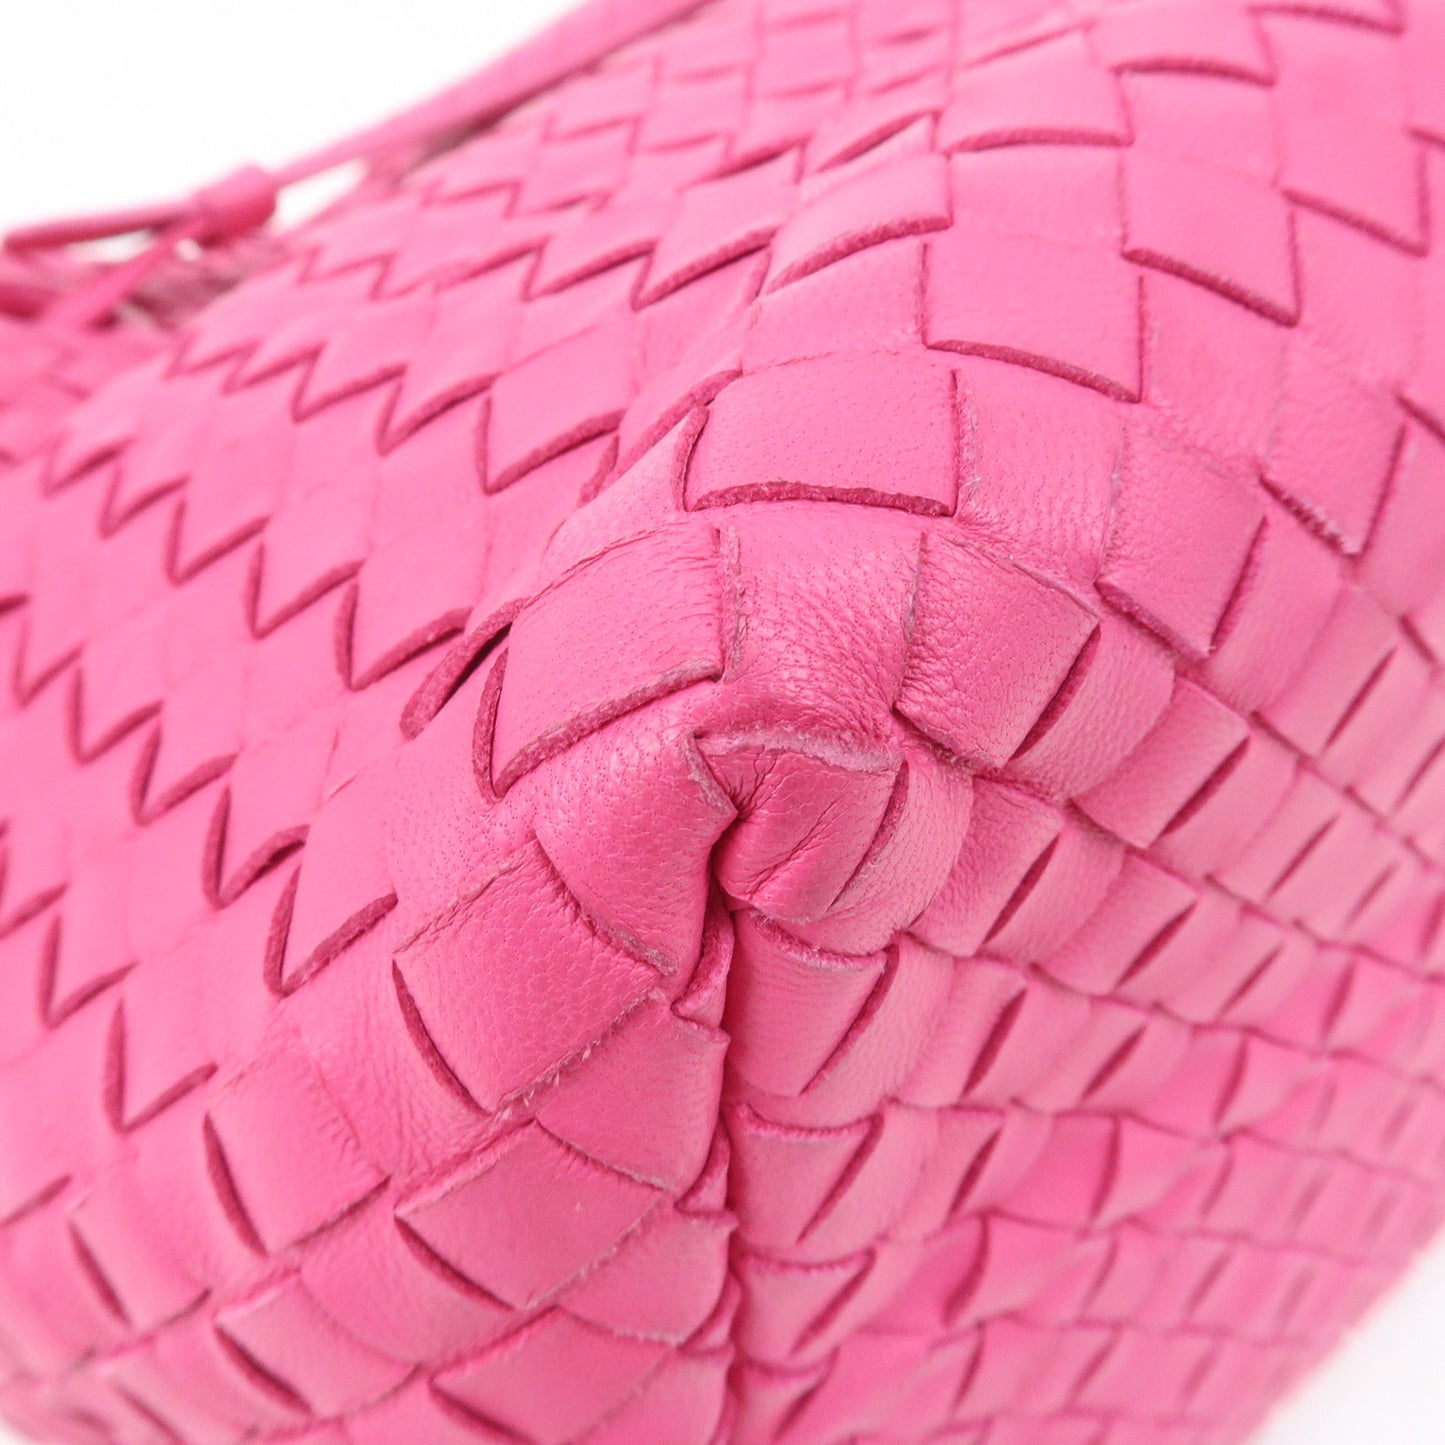 BOTTEGA VENETA Intrecciato Leather Large Garda Bag Pink 576593